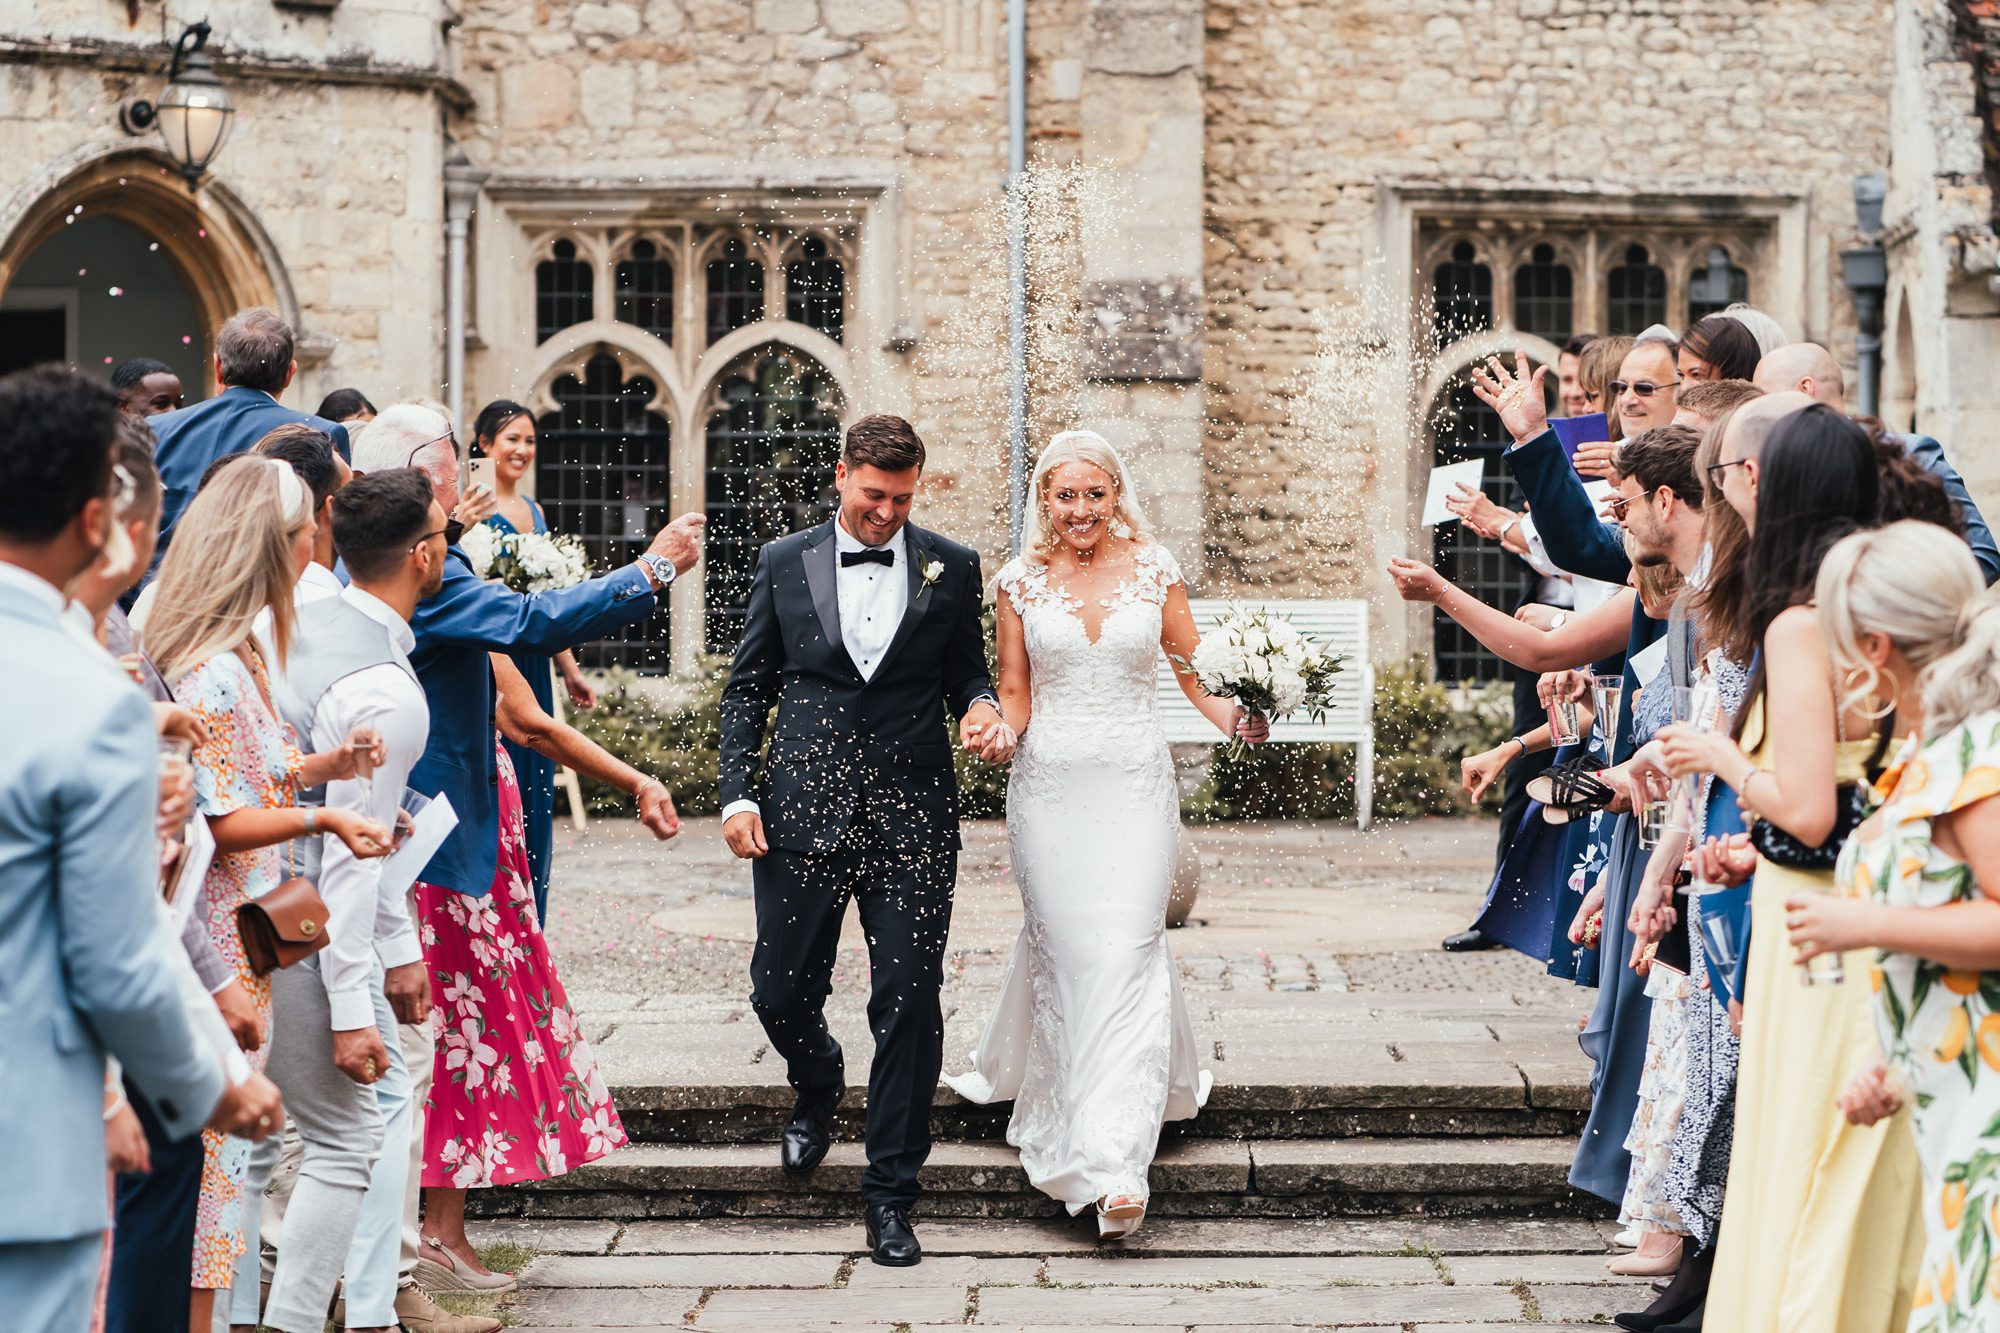 Notley Abbey wedding newlywed couple confetti walkway